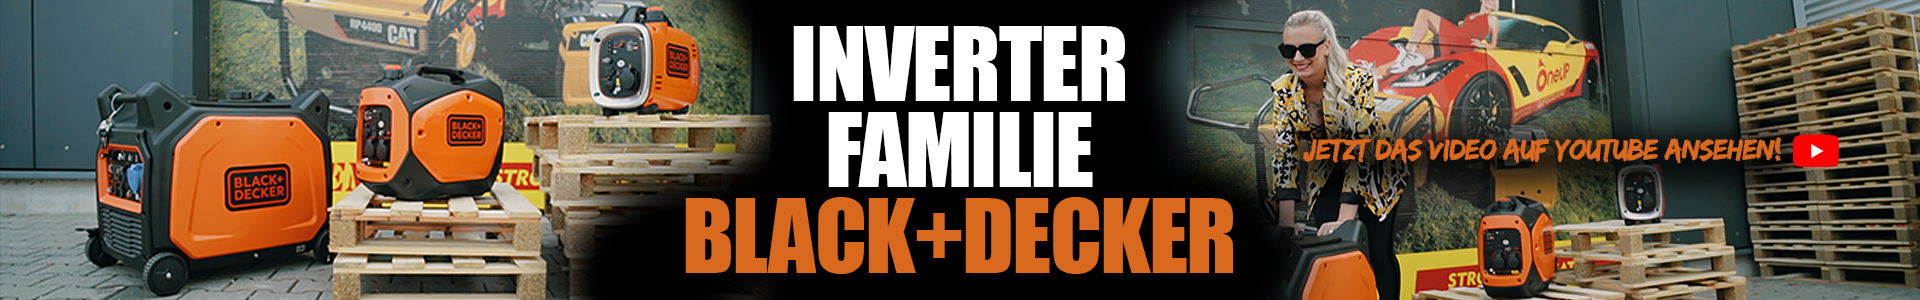 Inverter Familie Black+Decker